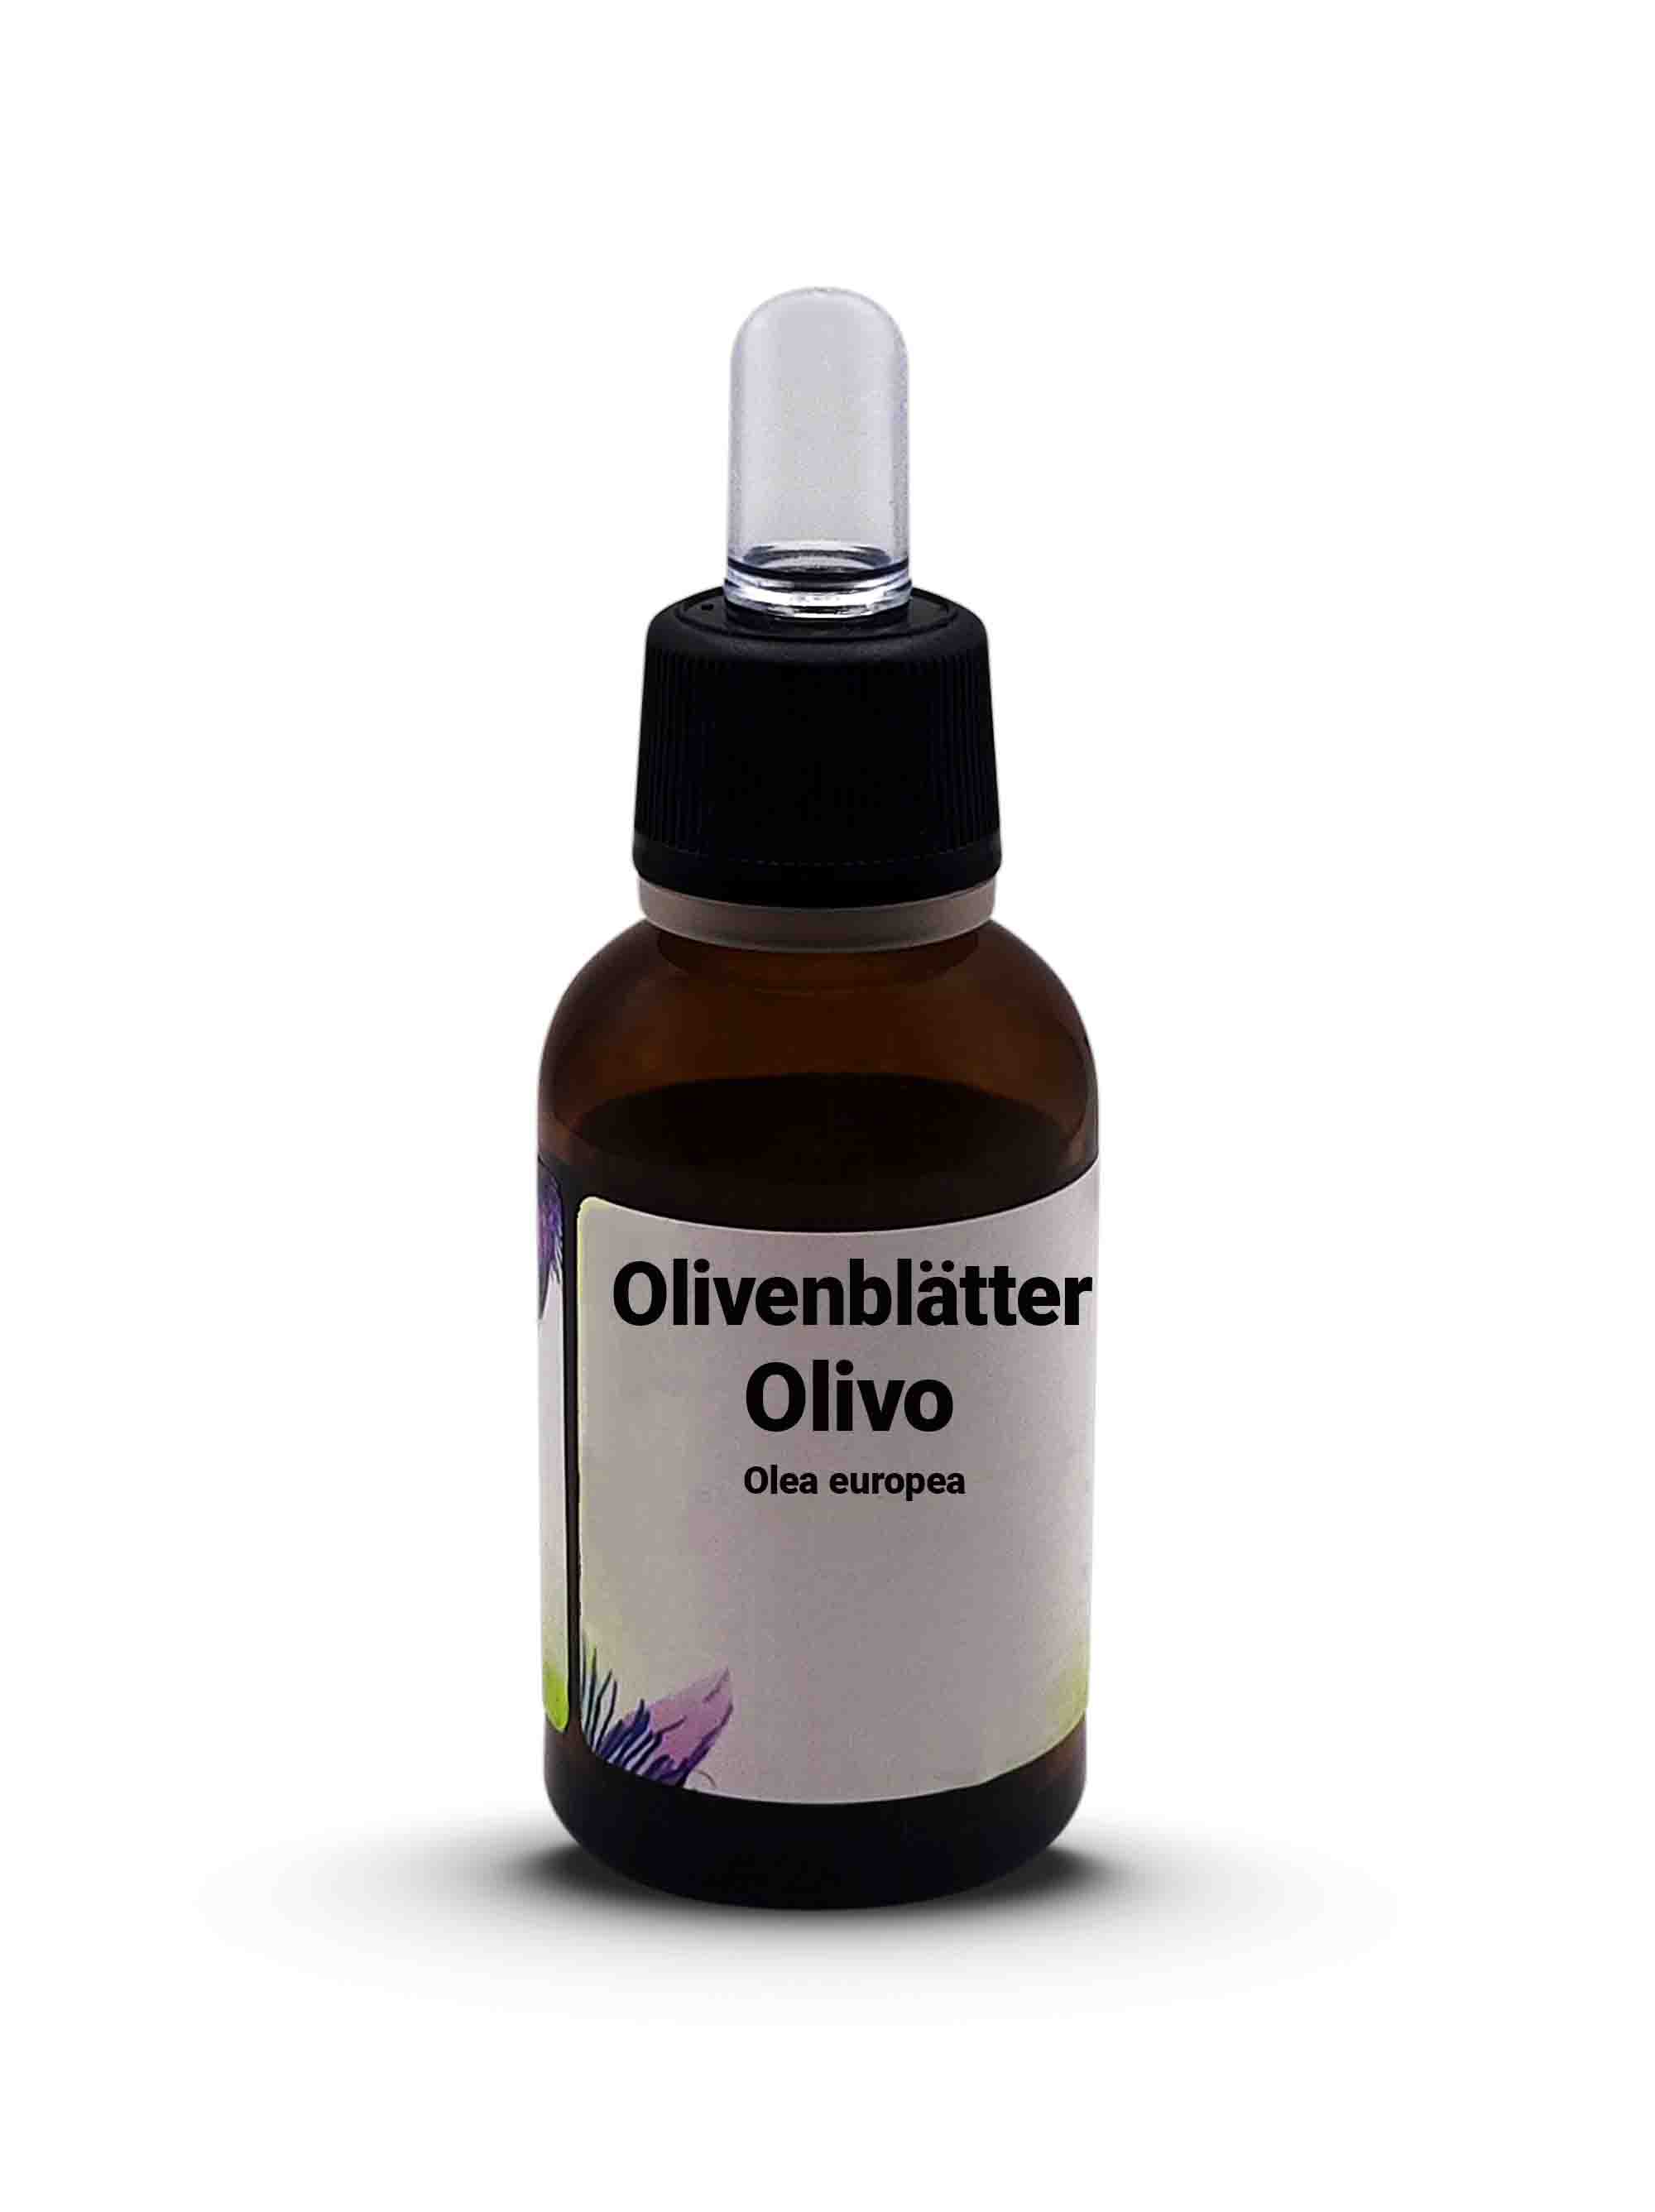 Olivenblätter Olivo - Olea europea 30 ml